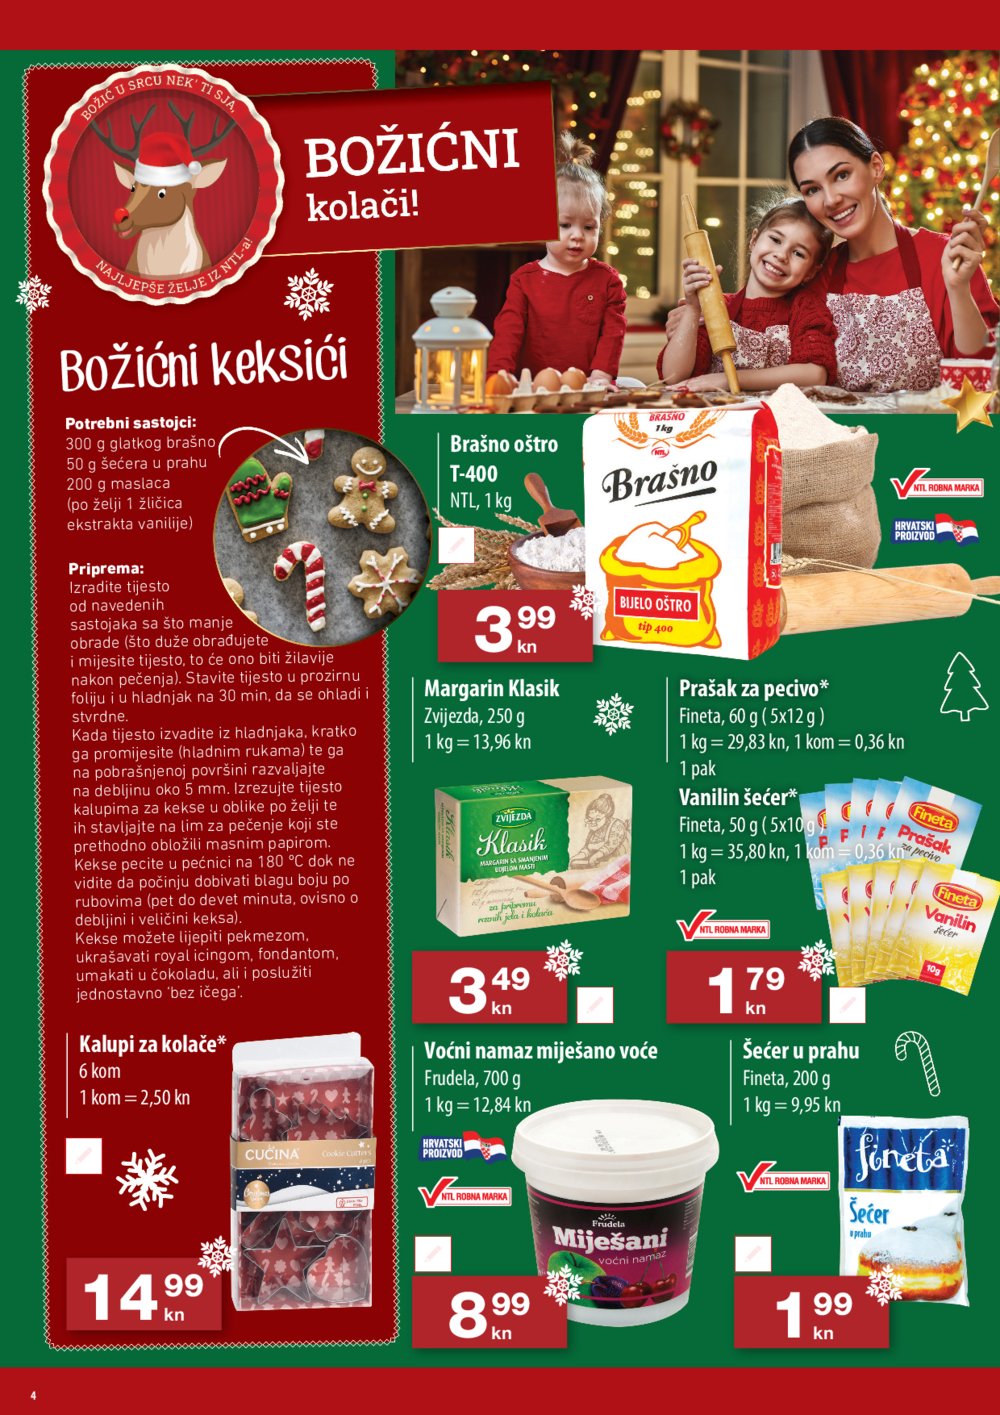 Trgovina Krk katalog NTL Maxi Tjedna ponuda 03.12.-09.12.2020.